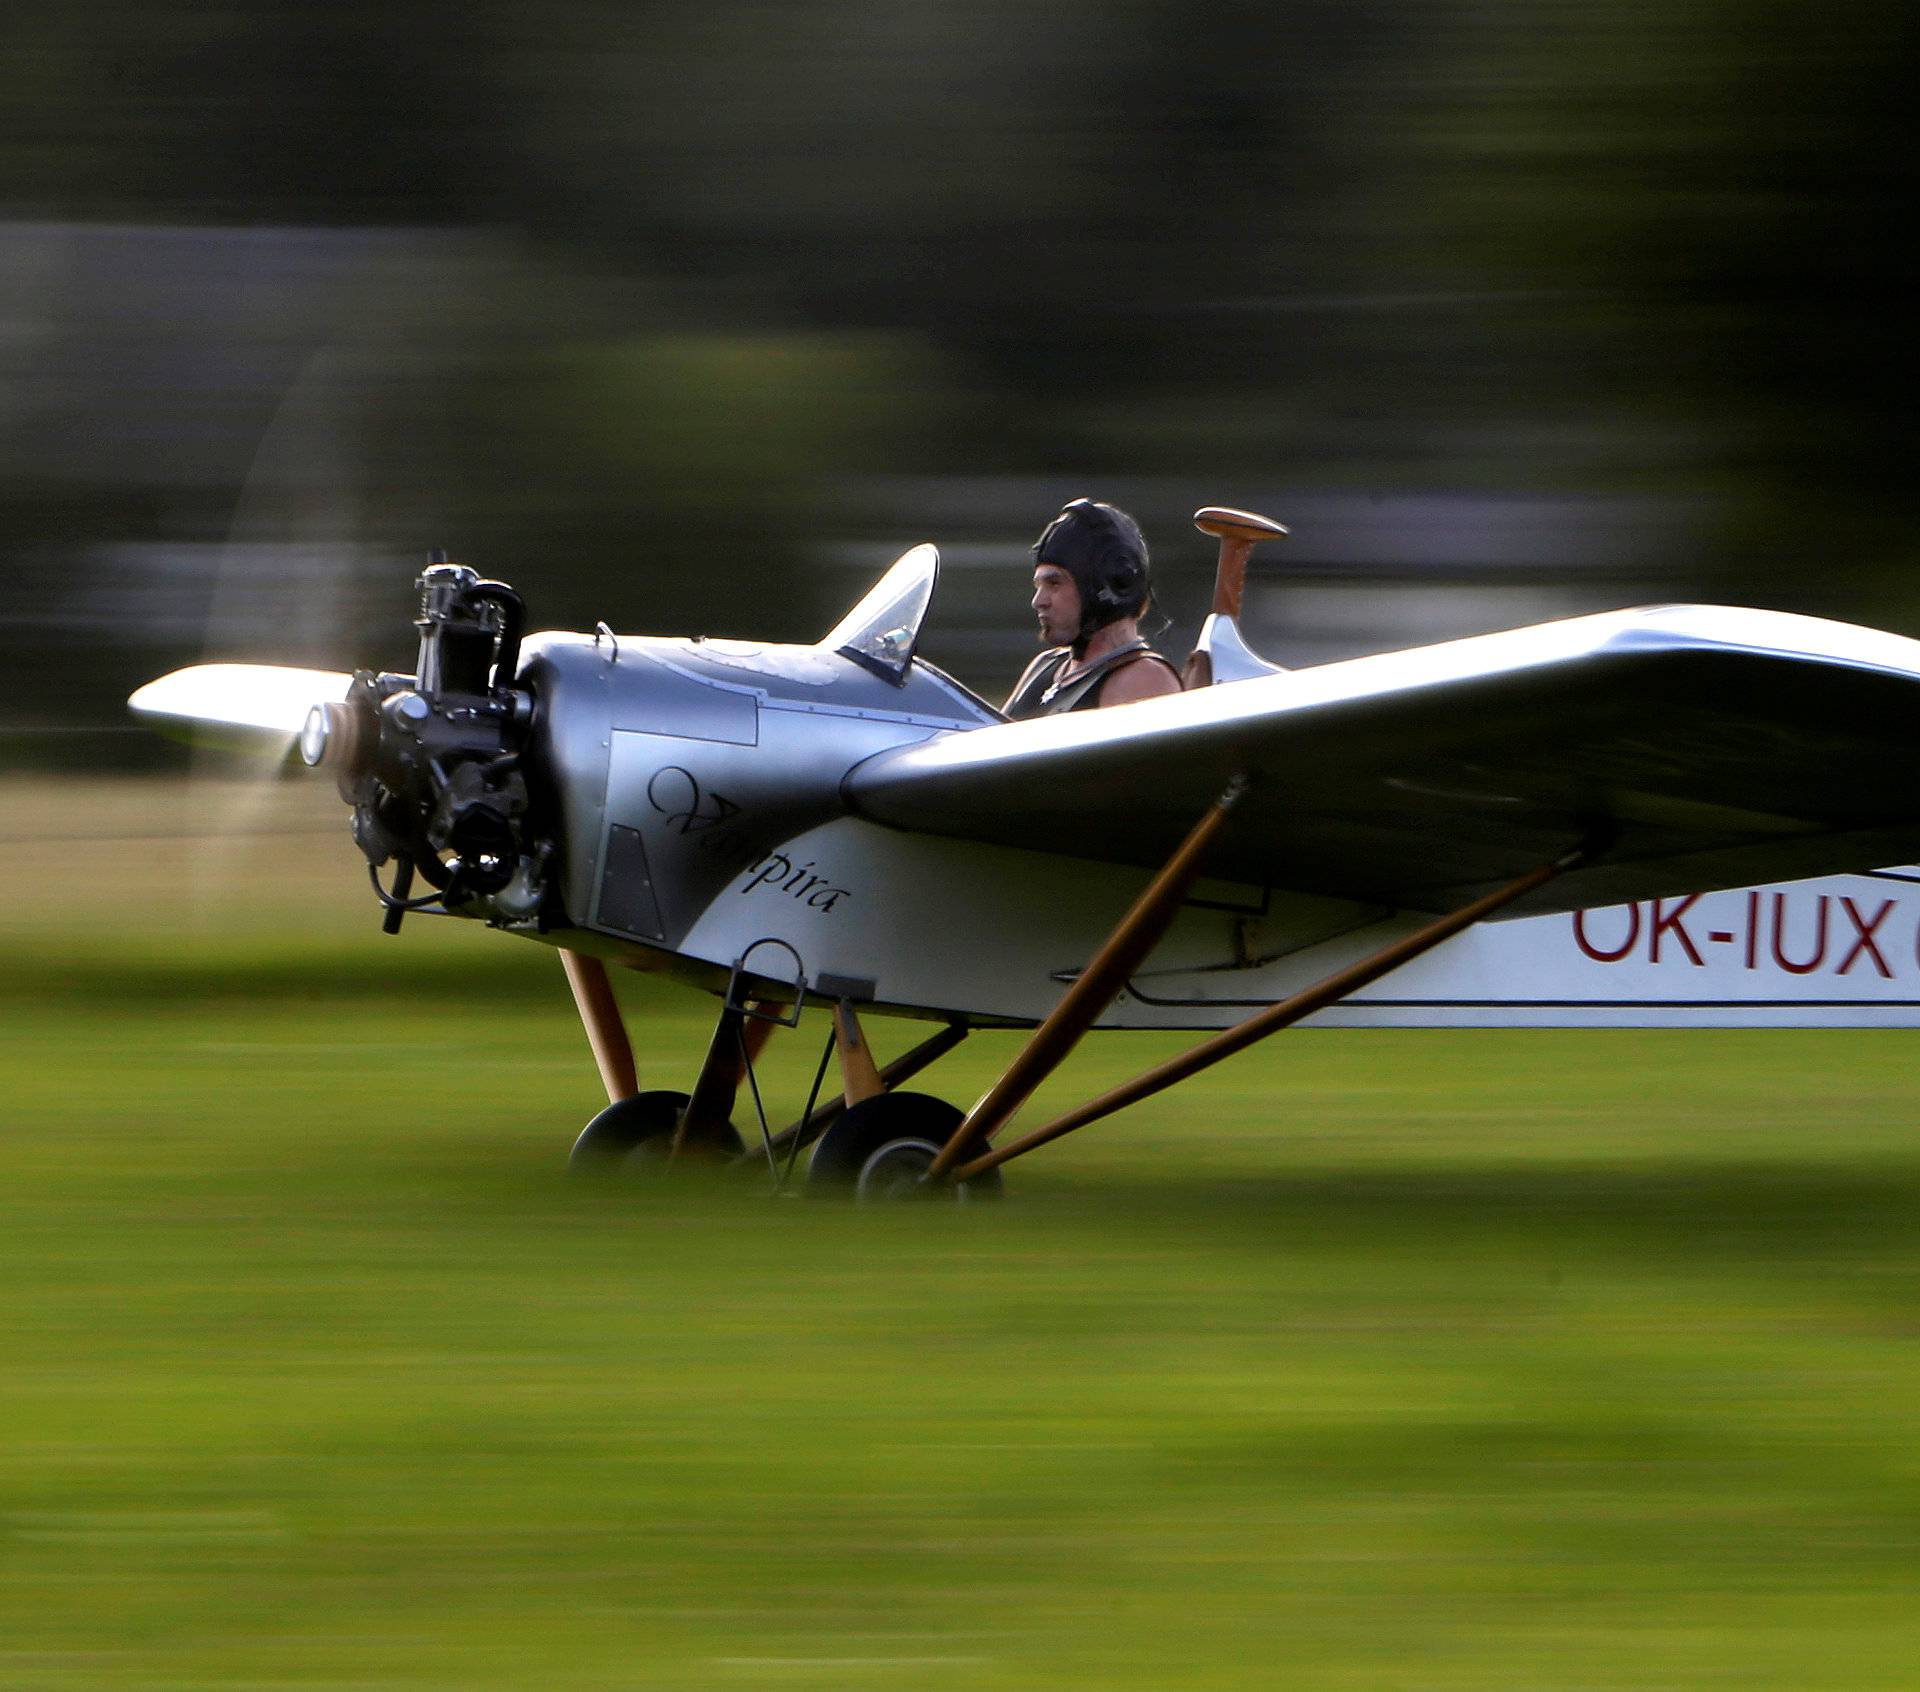 Aviator Frantisek Hadrava takes off with Vampira, an ultralight plane based on the U.S.-design of light planes called Mini-Max, near the village of Zdikov